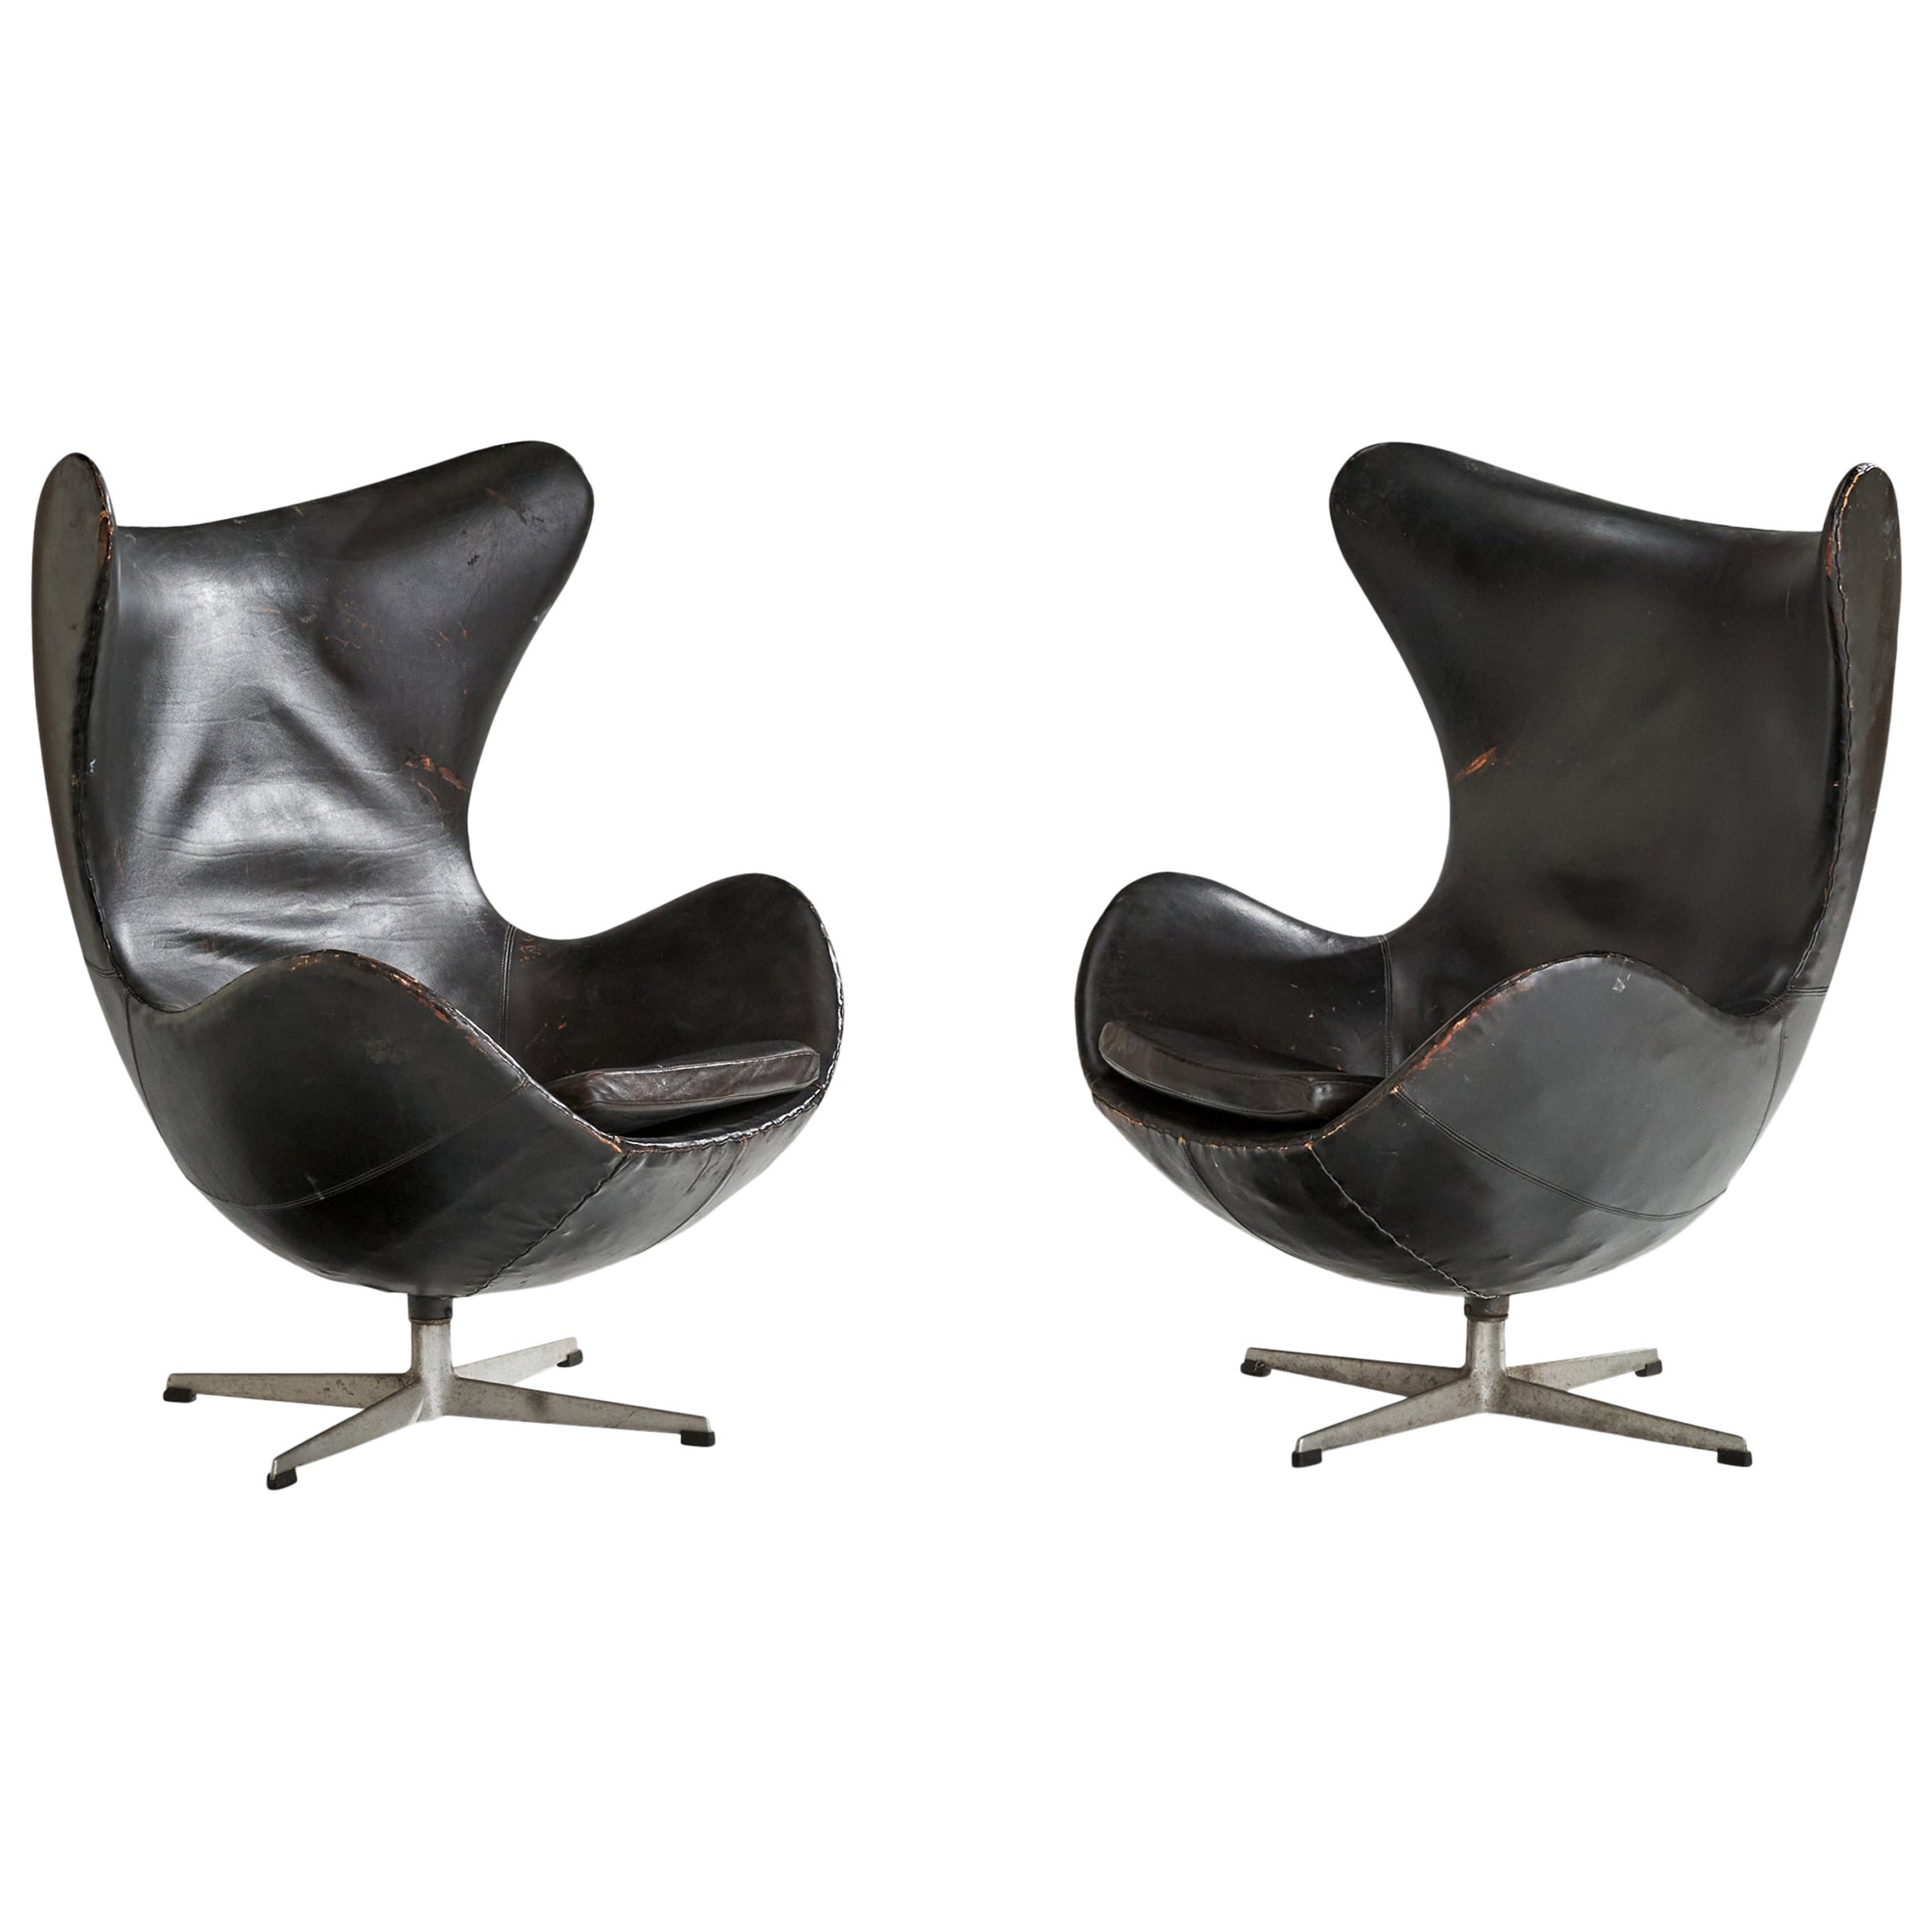 Arne Jacobsen, "Egg" Lounge Chairs, Leather, Steel, Denmark, 1958 For Sale